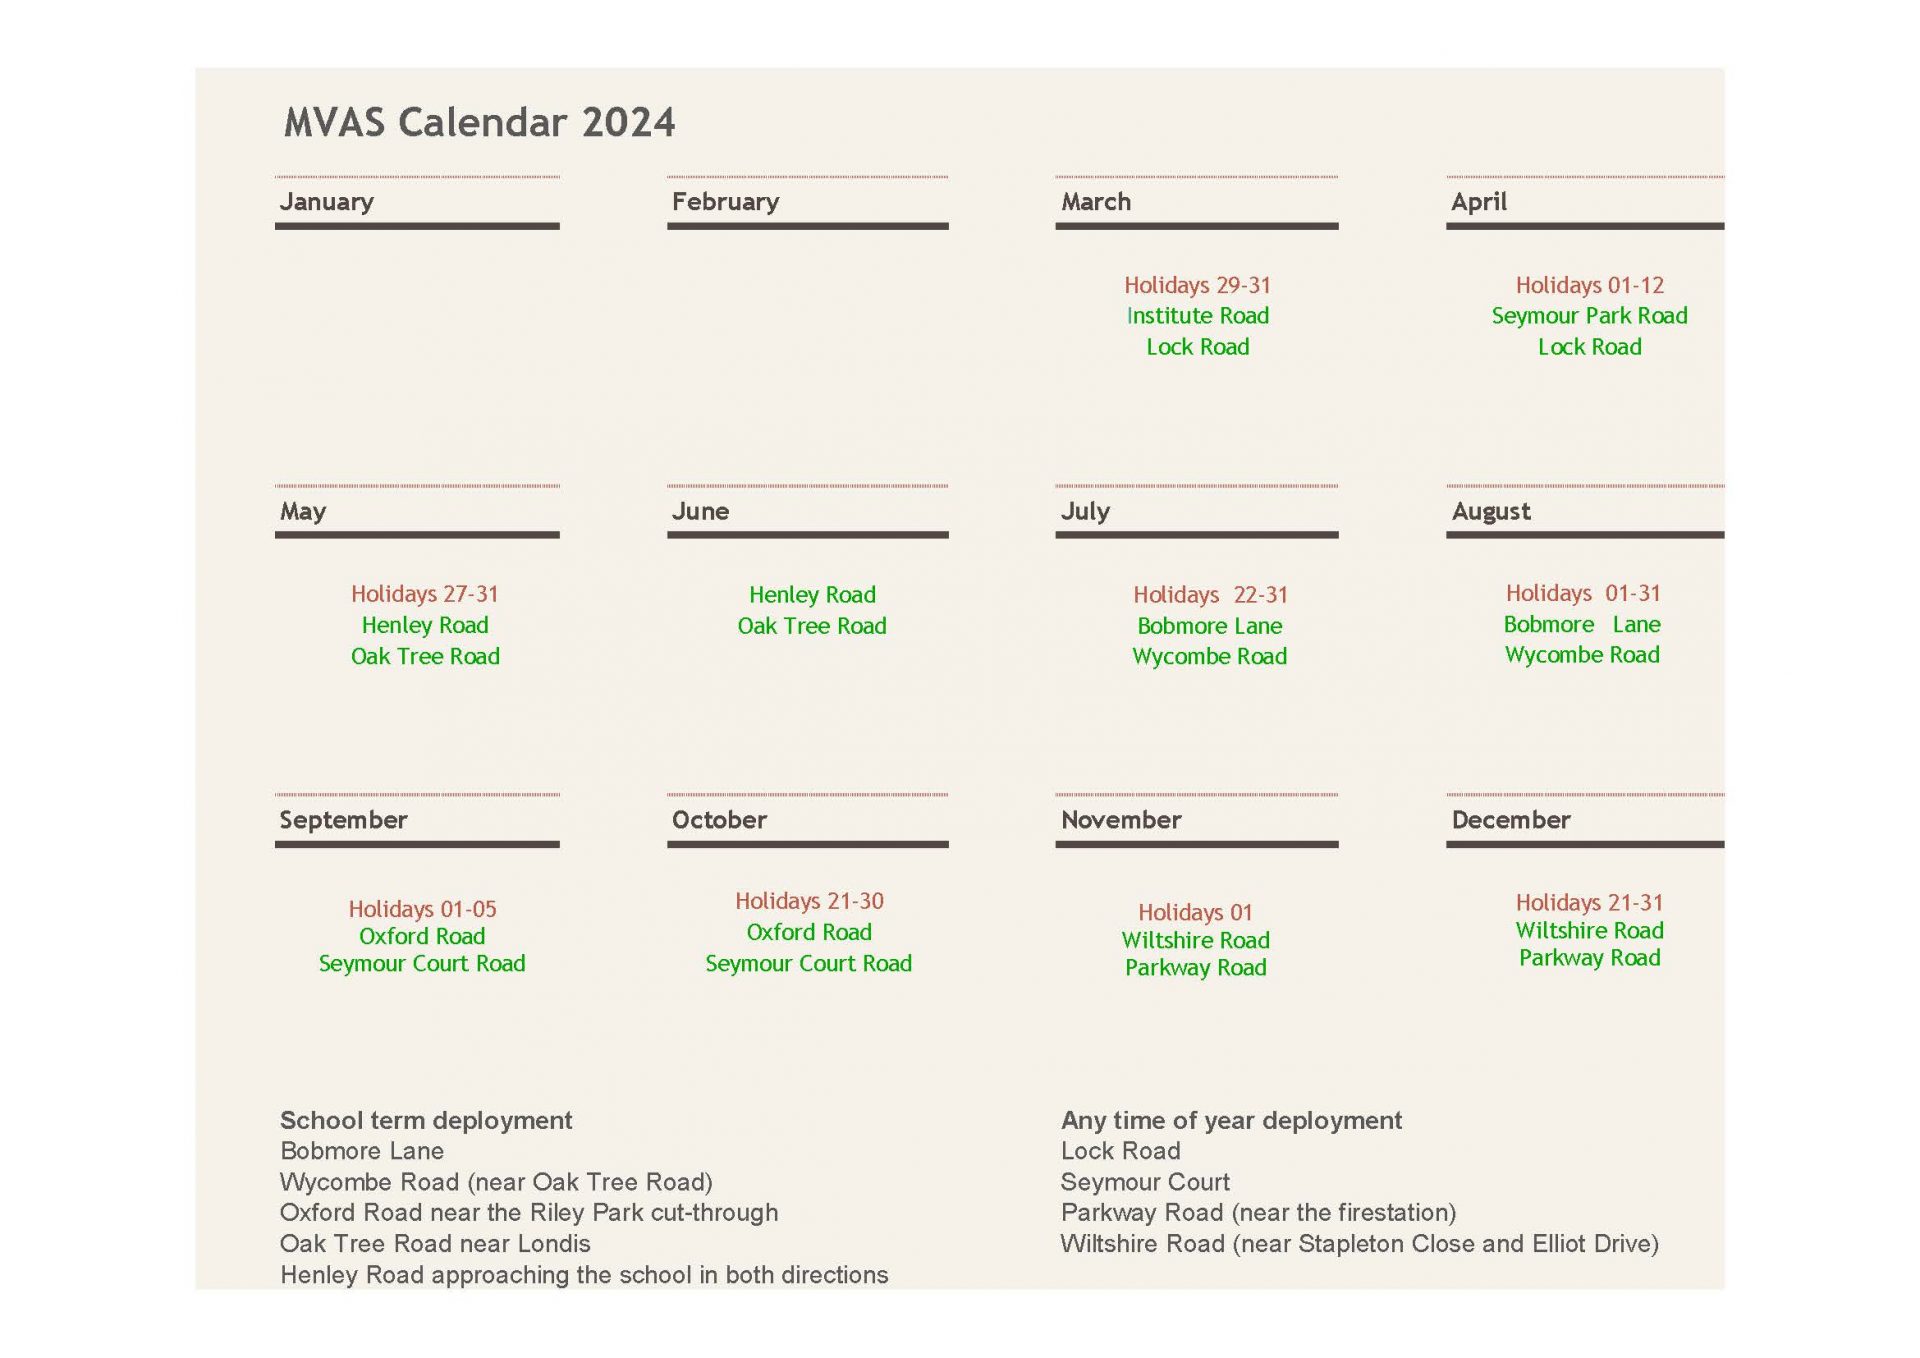 MVAS Calendar 2024